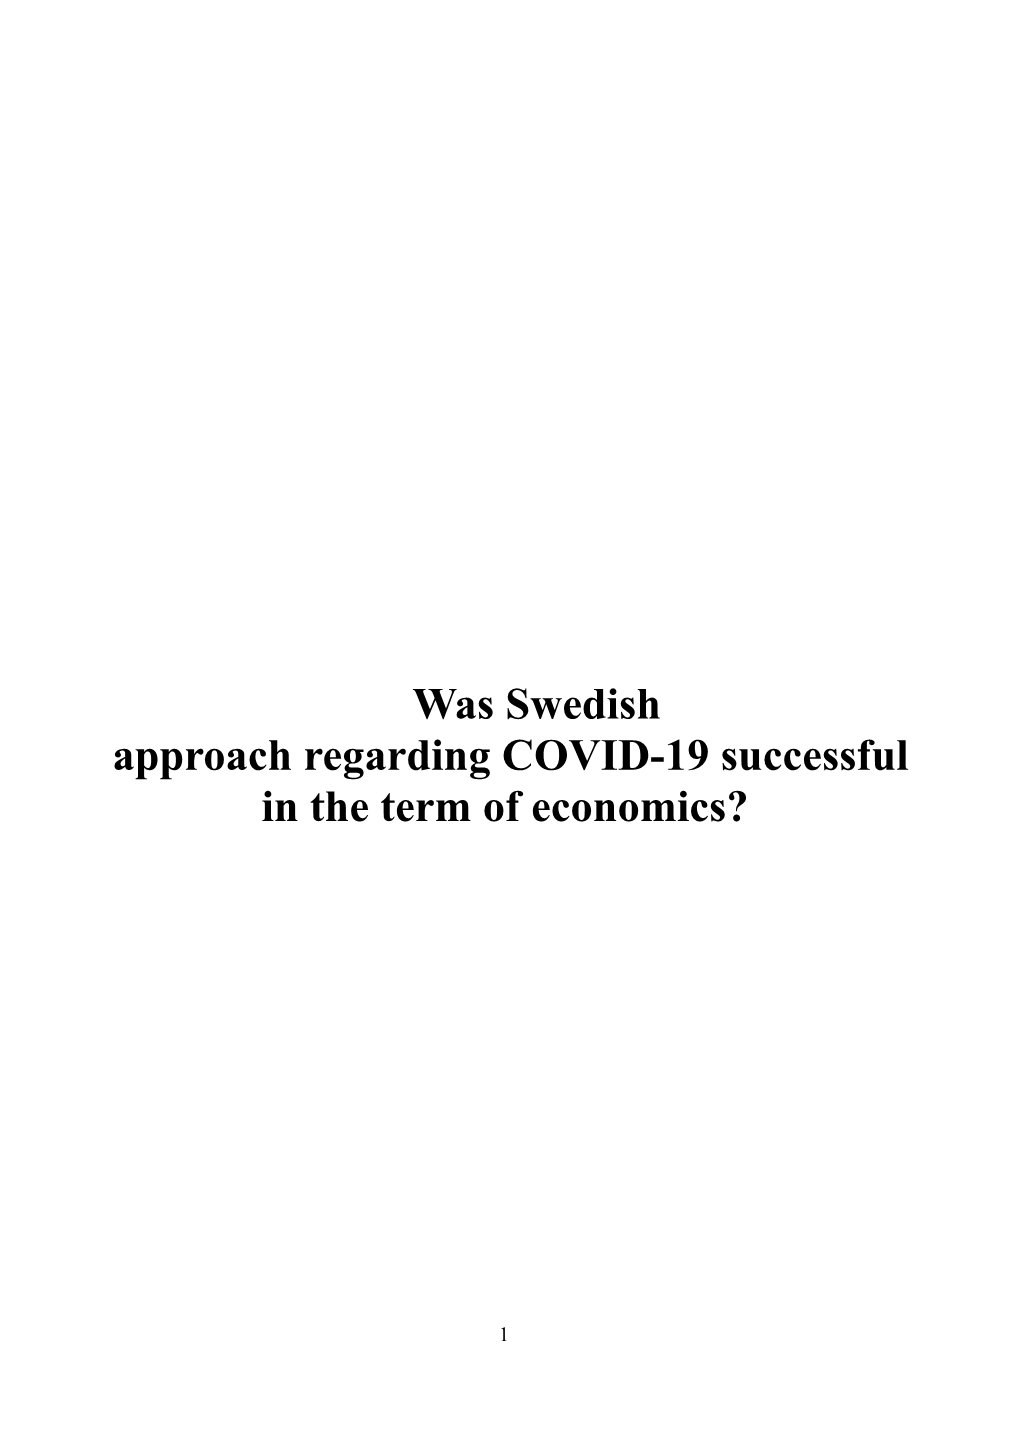 Was Swedish Approach Regarding COVID-19 Successful in the Term of Economics?